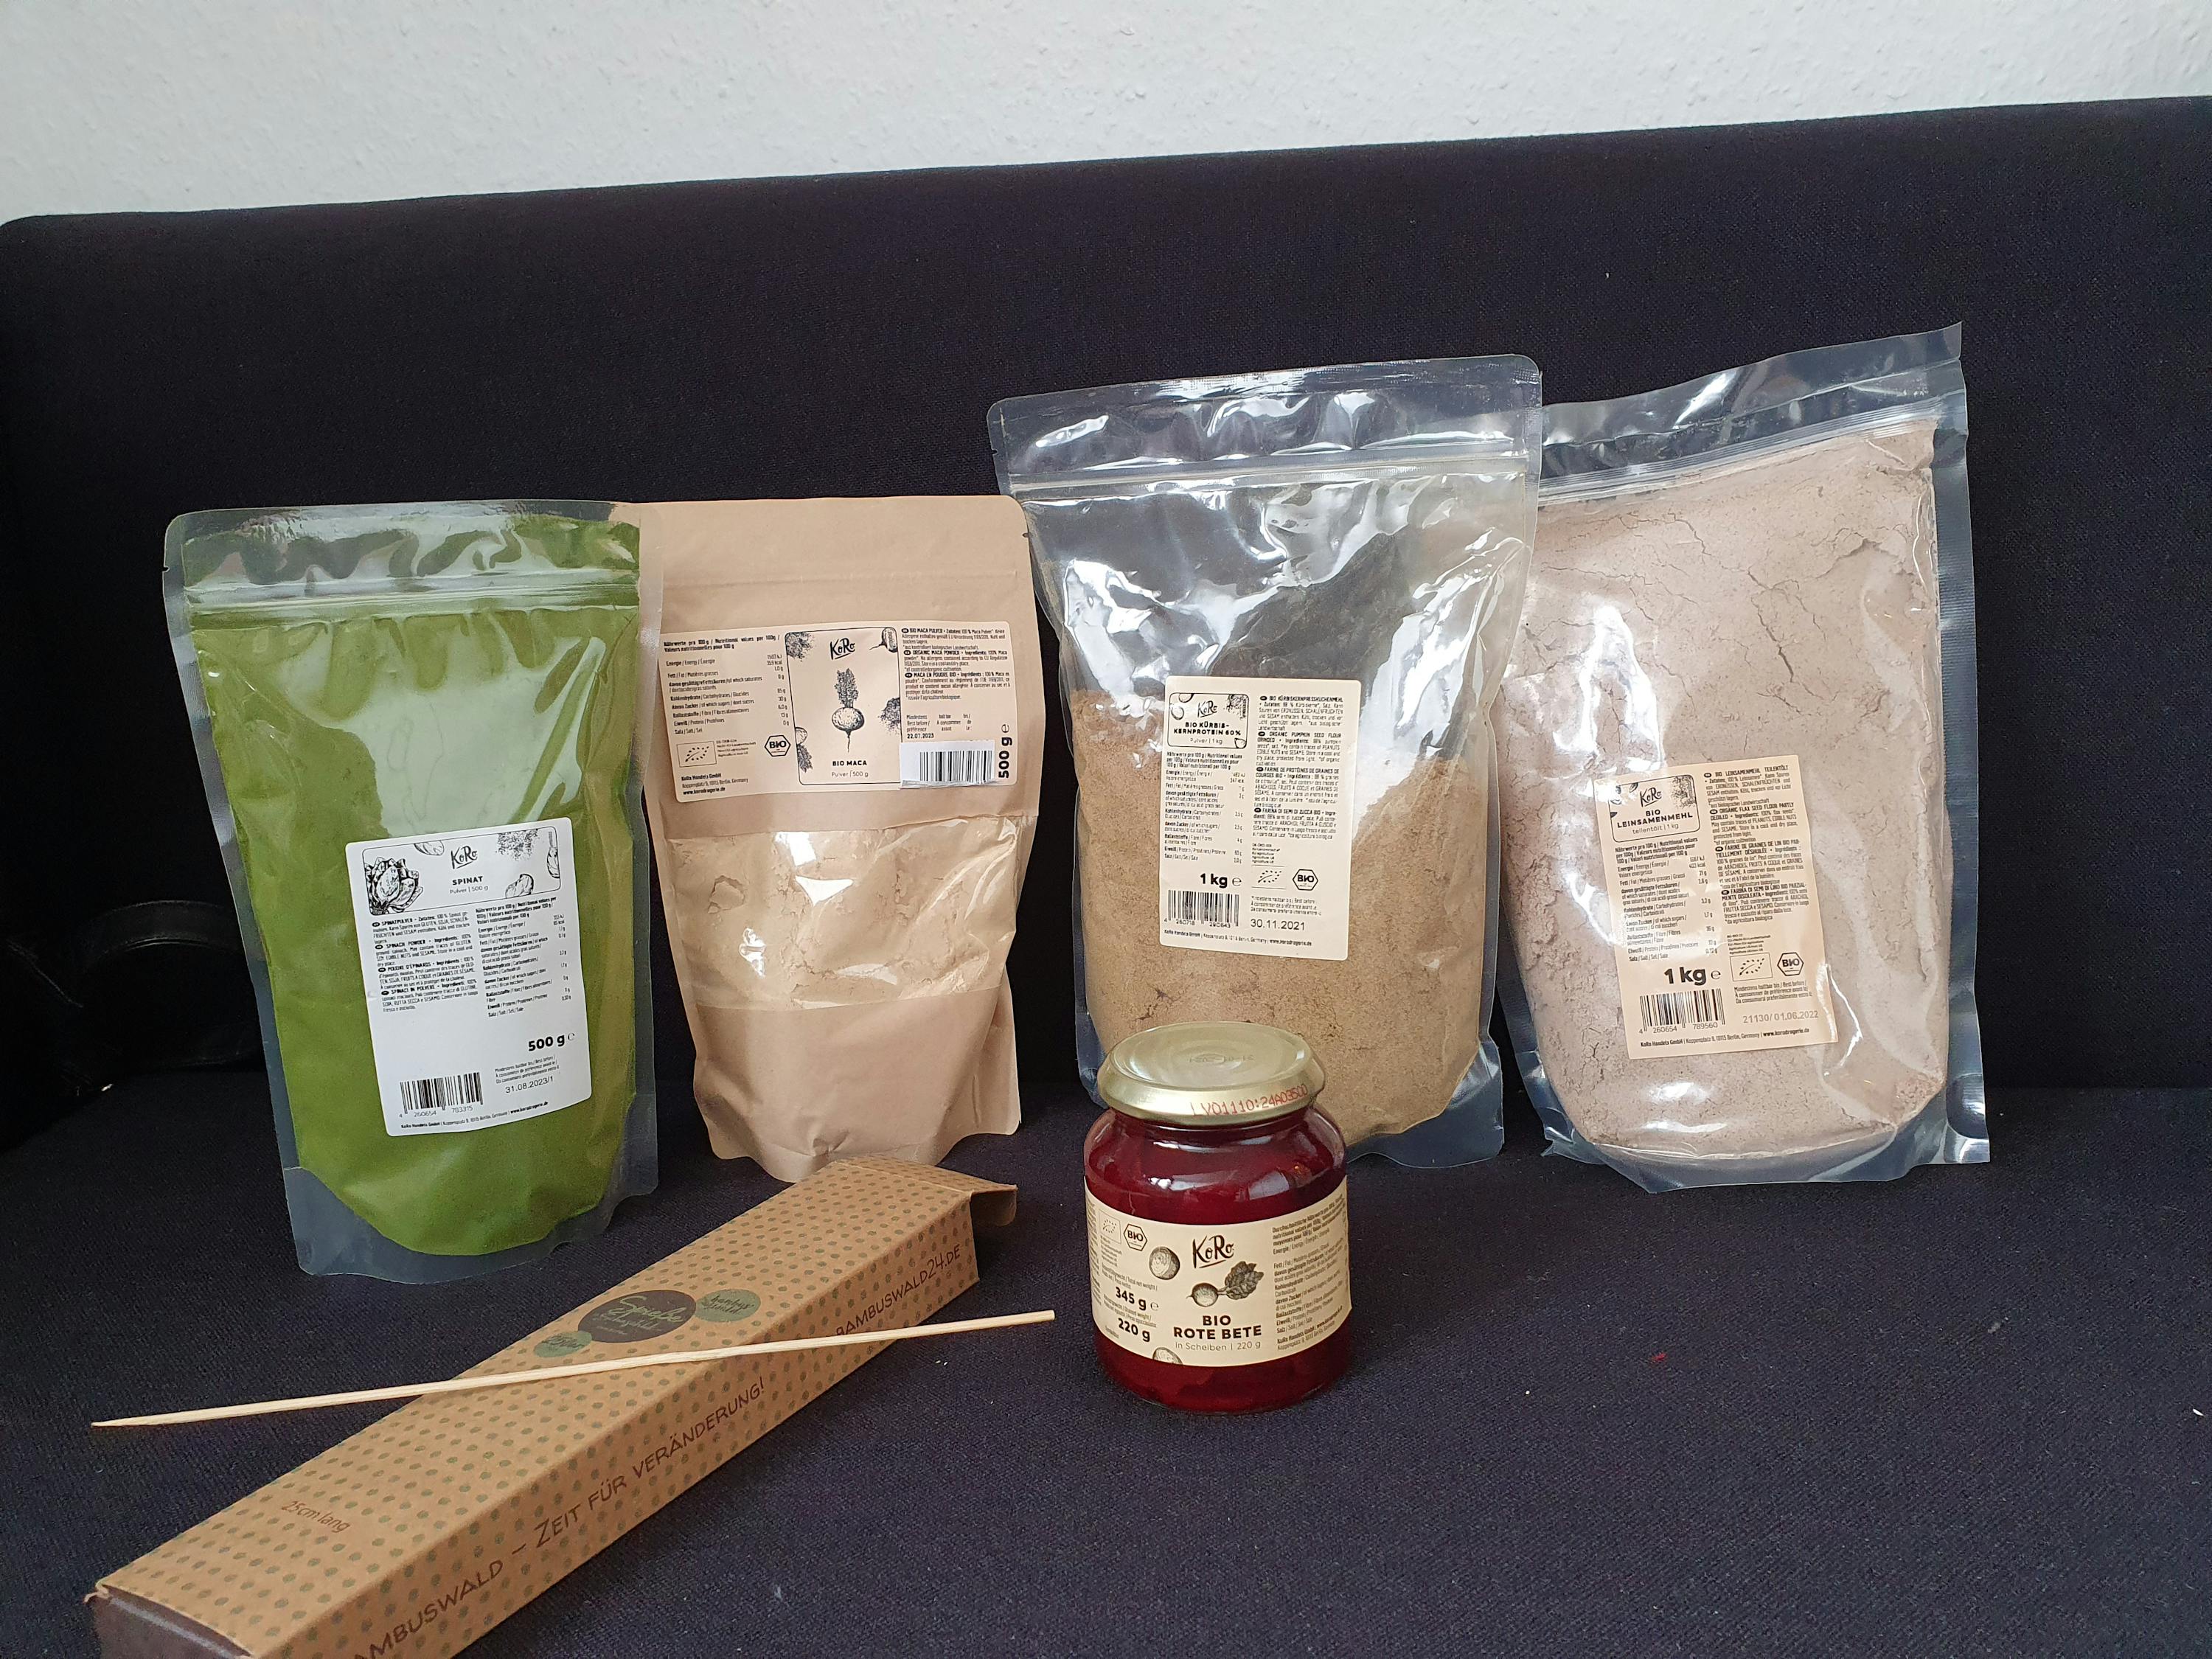 Farine de graines de lin biologique, 250 g - Bioenergie - Boutique